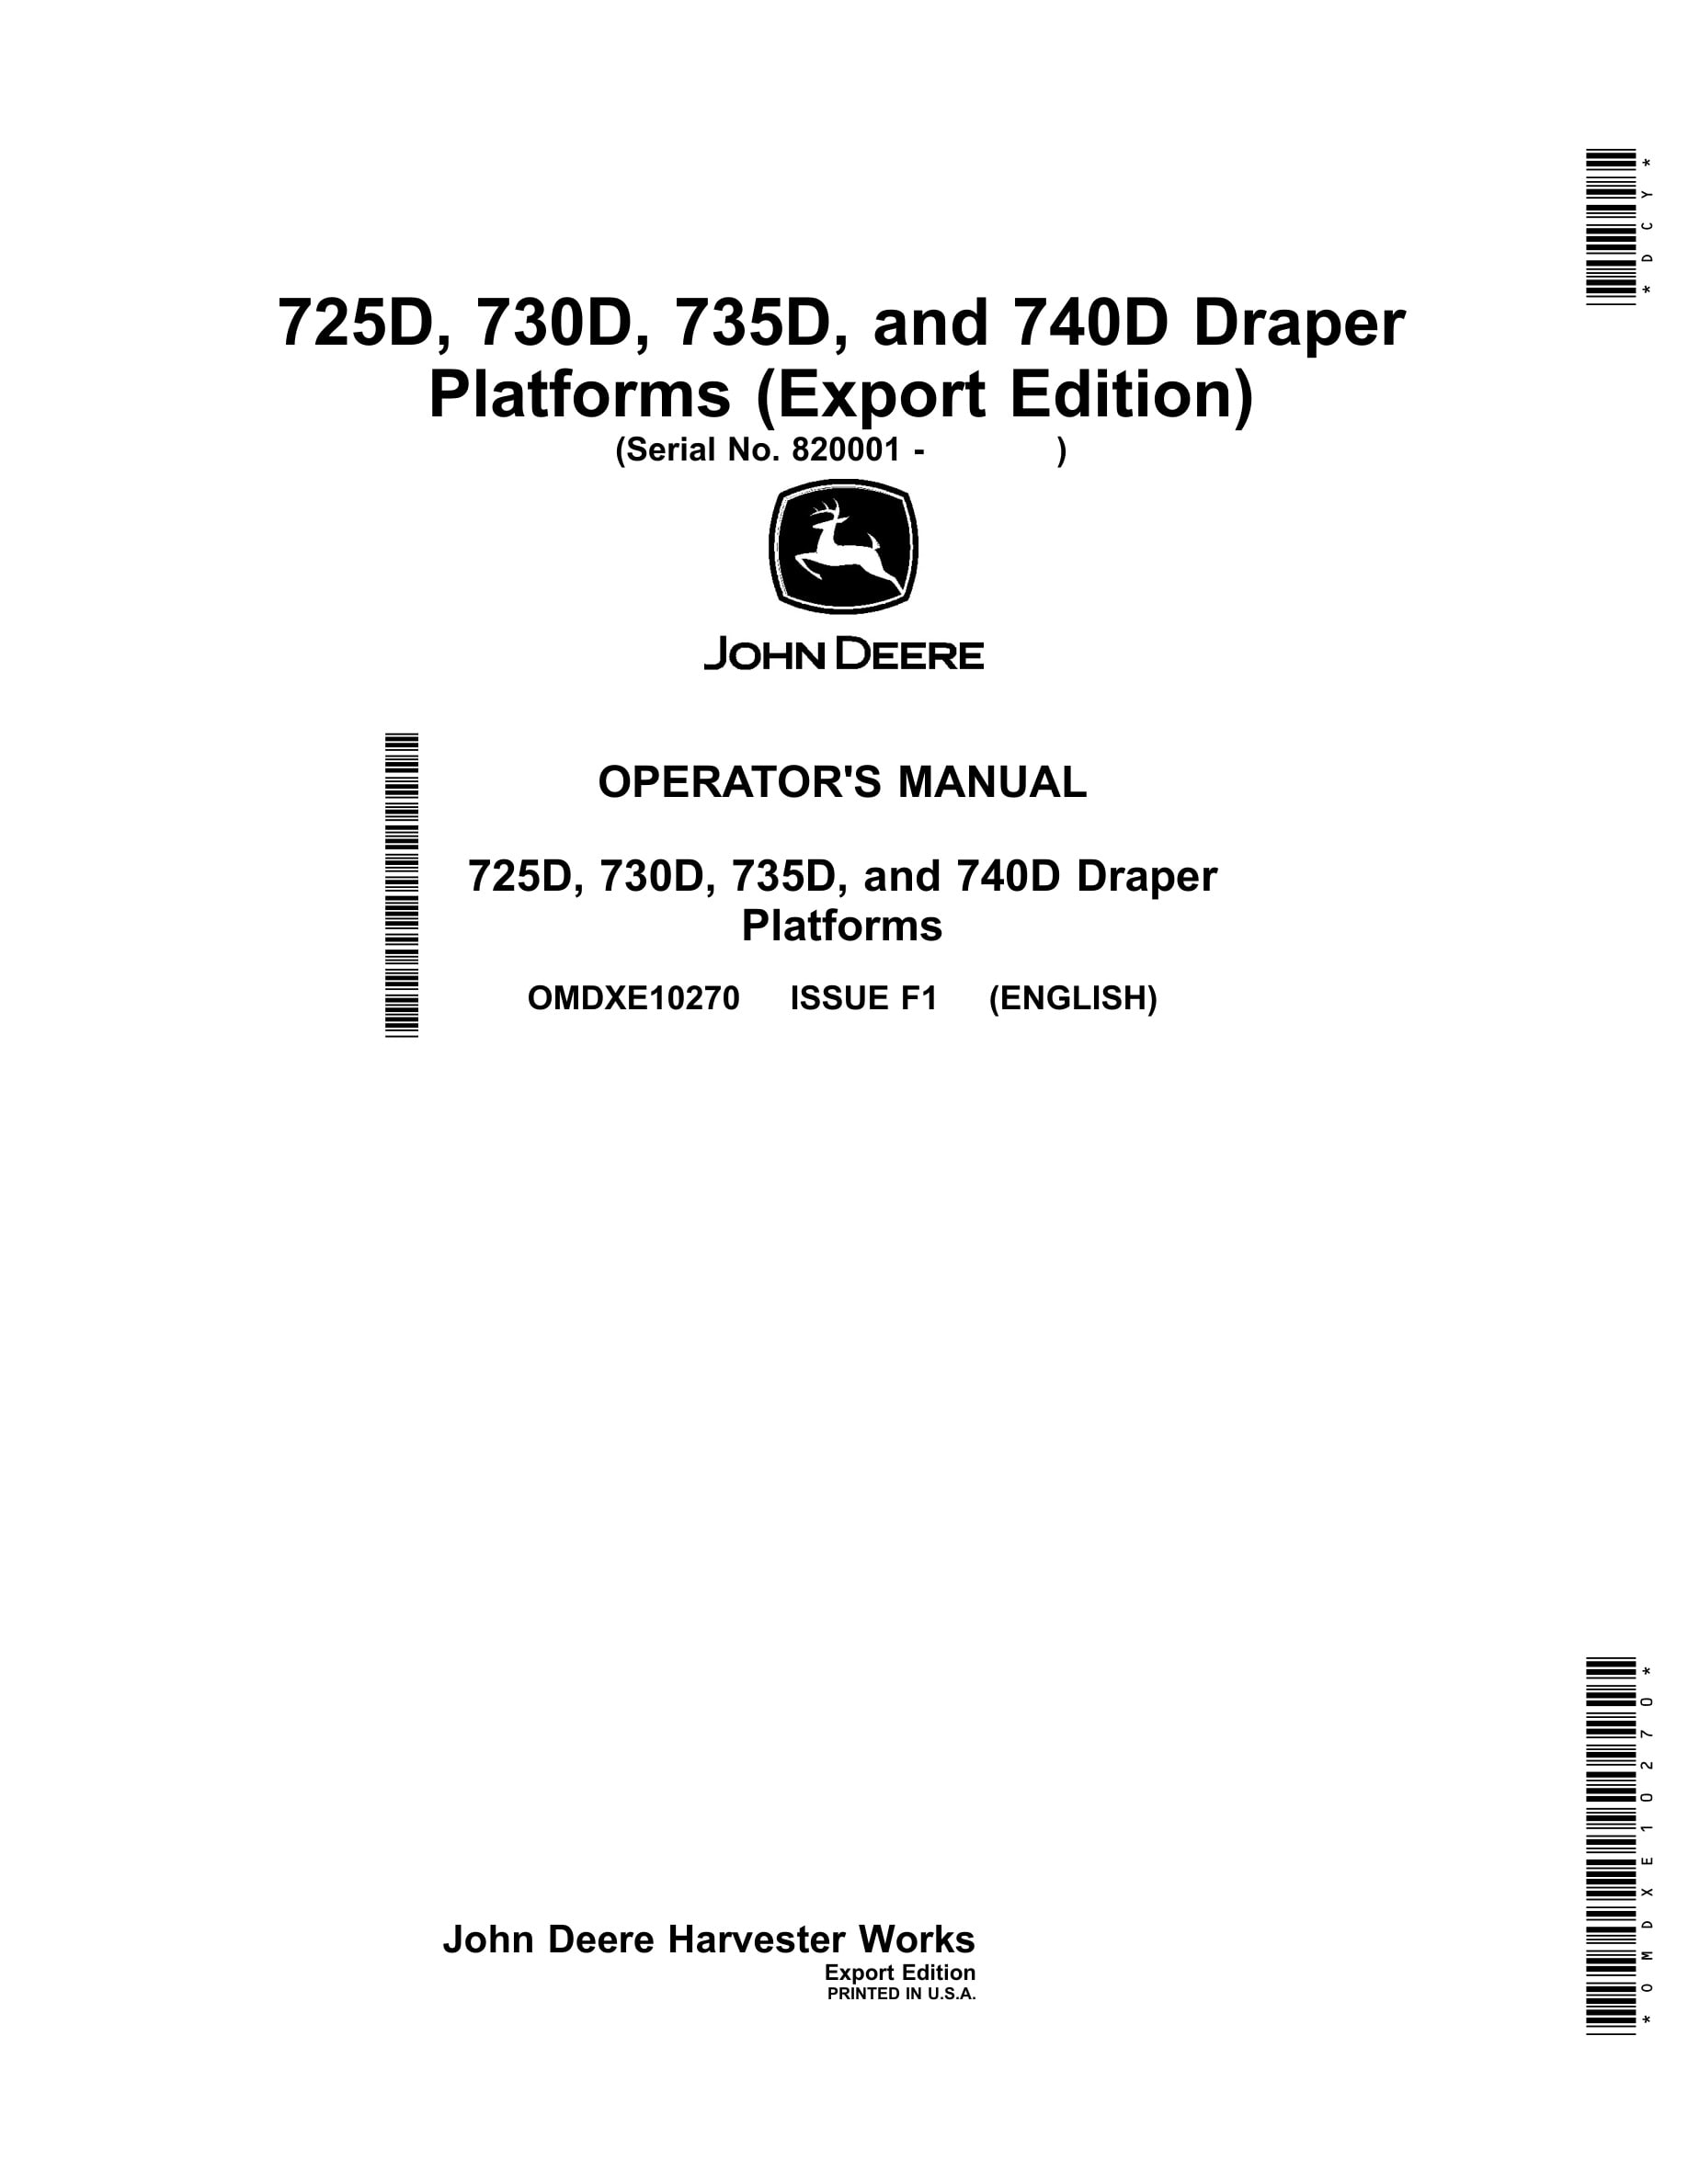 John Deere 725D, 730D, 735D, and 740D Draper Platforms Operator Manual OMDXE10270-1